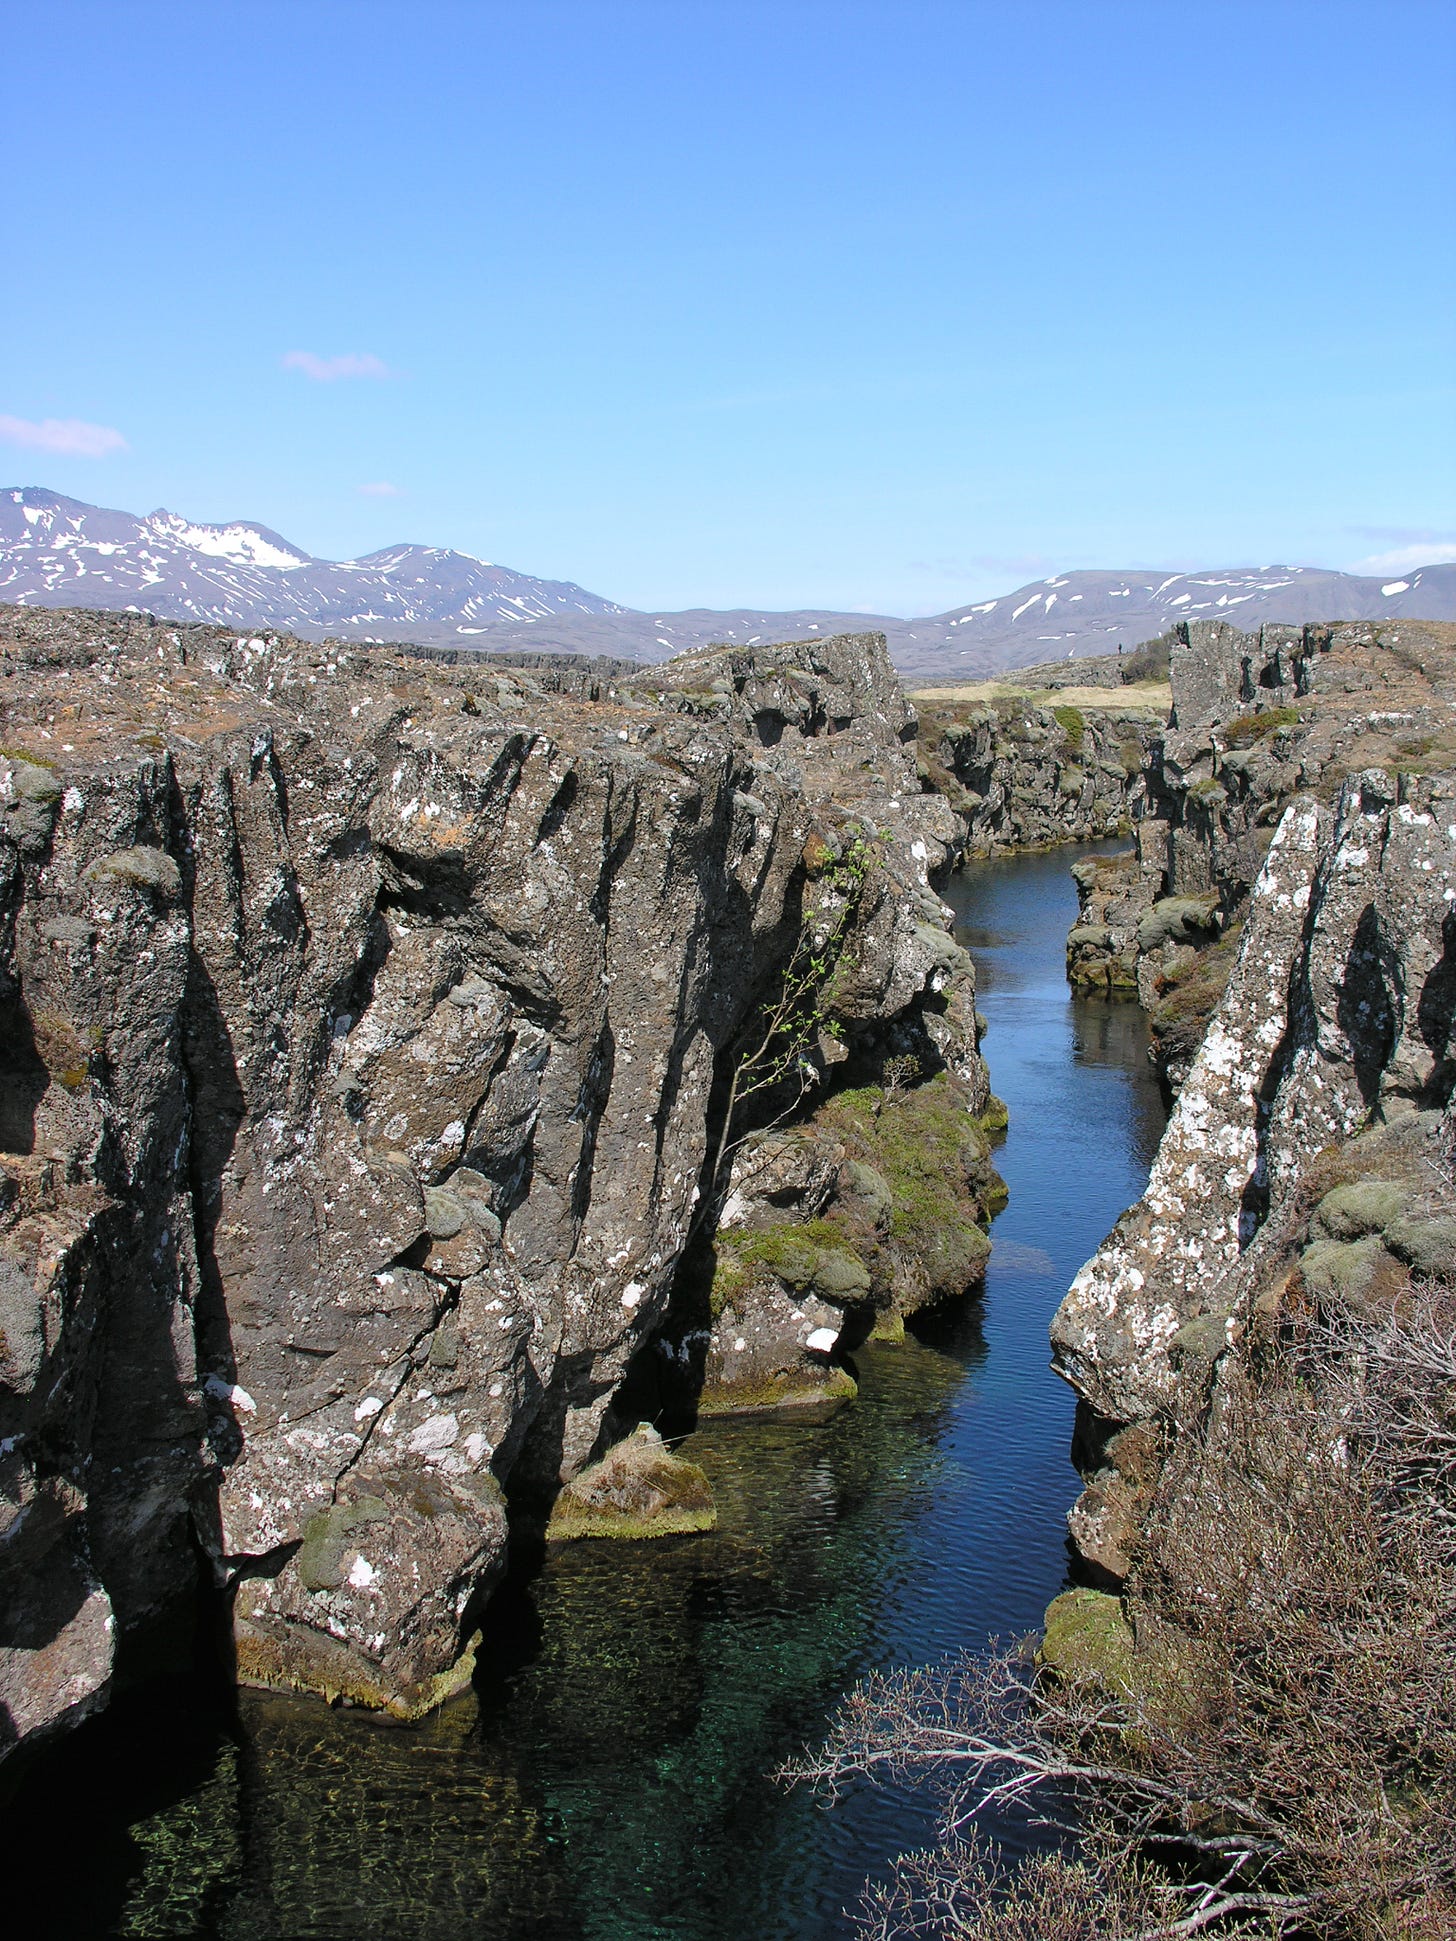 File:2008-05-25 13 45 35 Iceland-Þingvellir.jpg - Wikimedia Commons